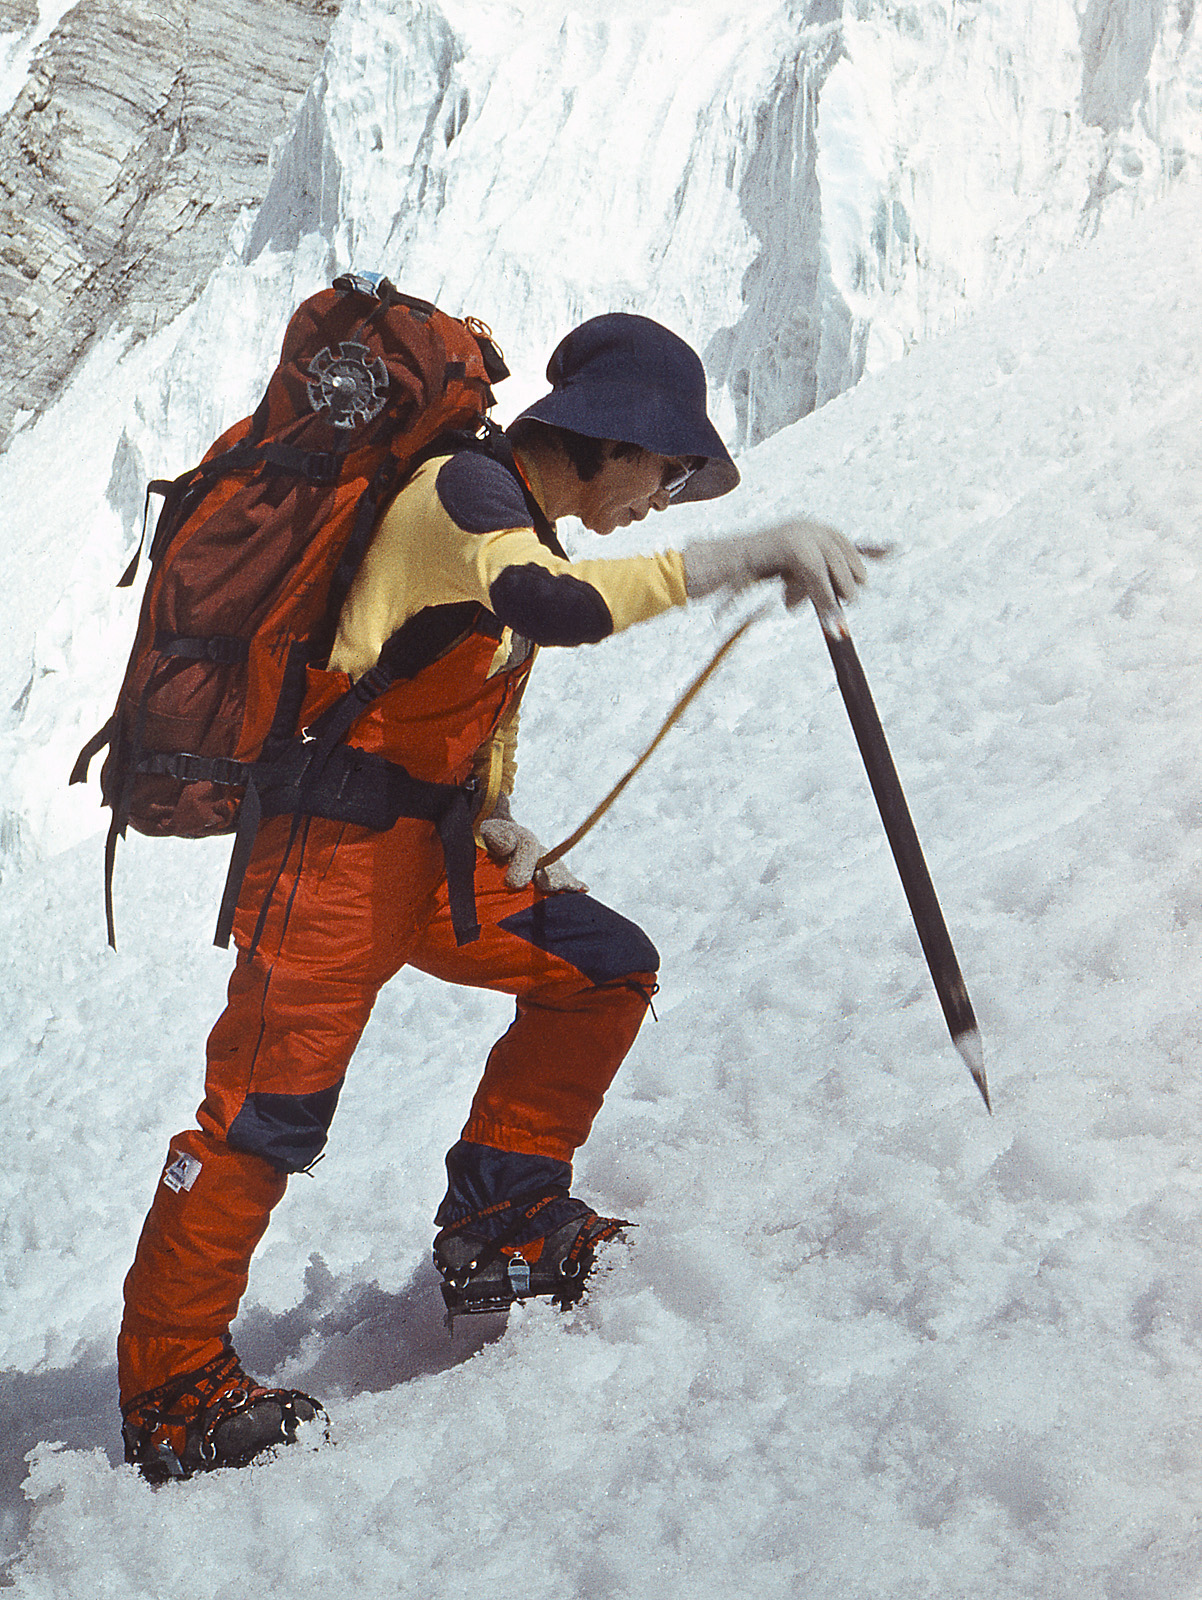 Junko Tabei climbs Somoni Peak (7495m), formerly known as Communism Peak, in 1985. [Photo] Jaan Kunnap